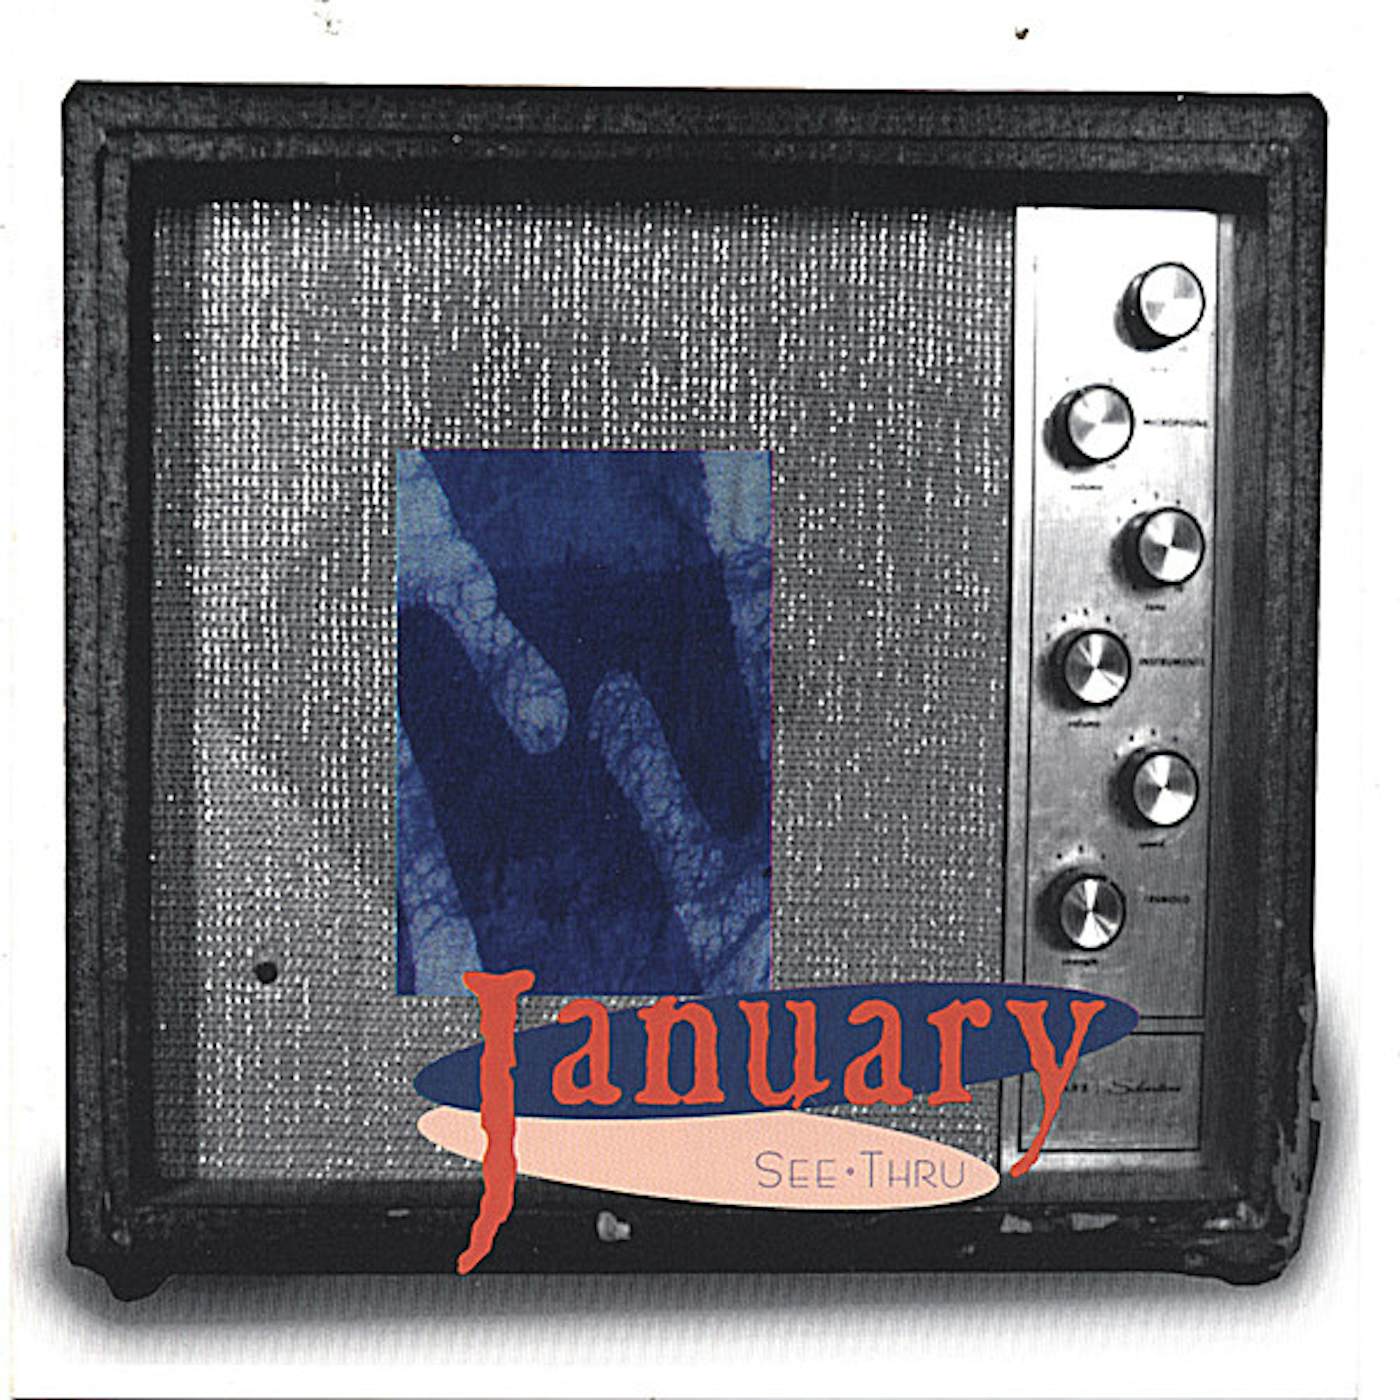 January SEE-THRU CD